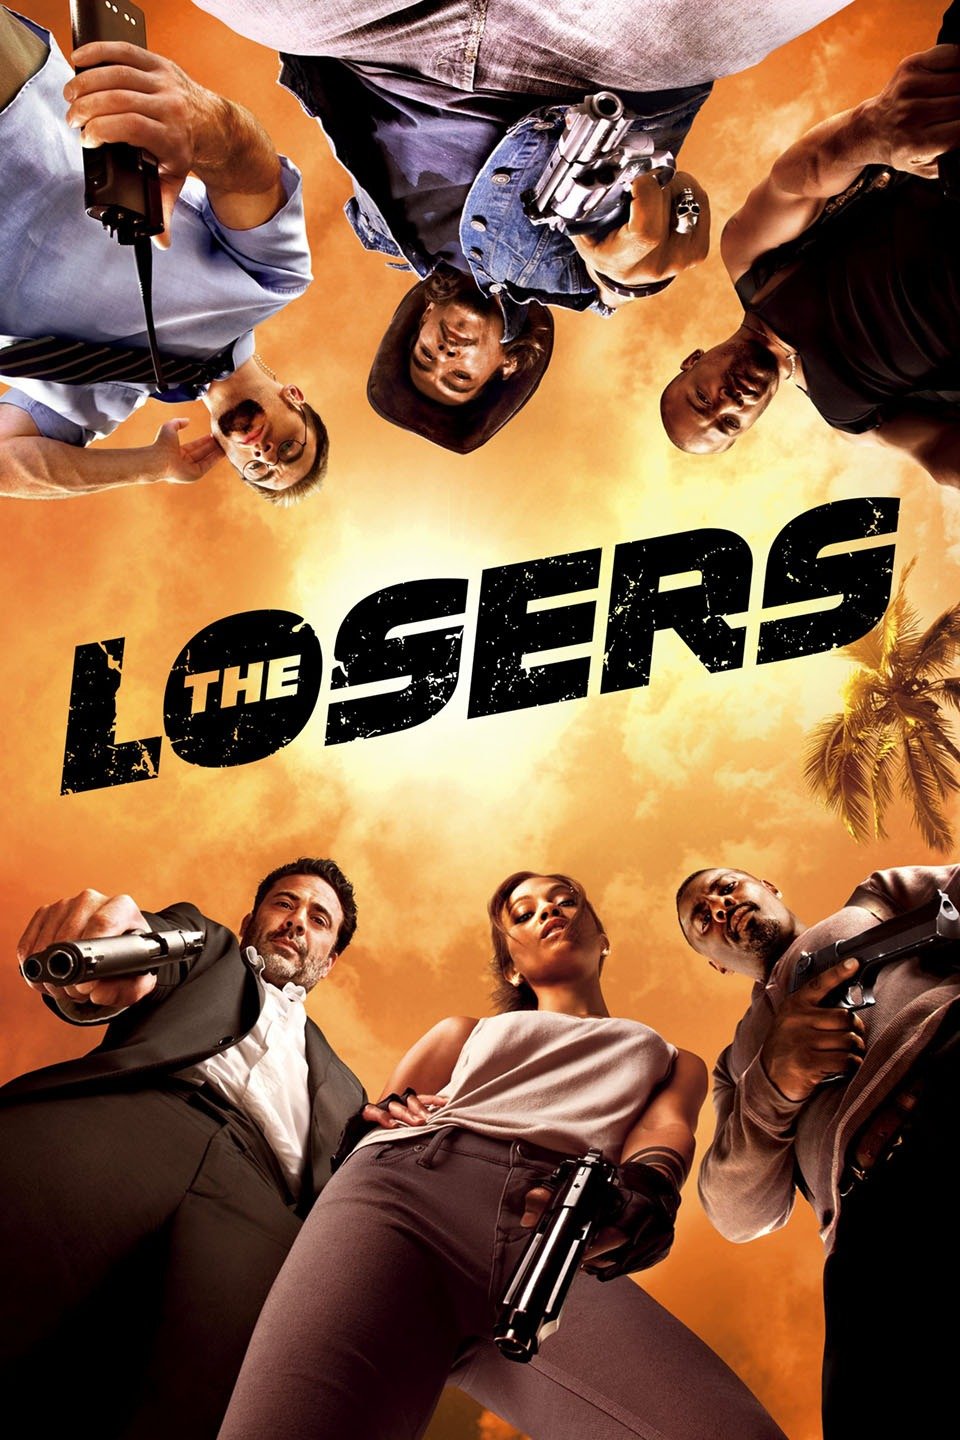 [MINI Super-HQ] The Losers (2010) โคตรทีม อ.ต.ร. แพ้ไม่เป็น [1080p] [พากย์ไทย 5.1 + เสียงอังกฤษ DTS] [บรรยายไทย + อังกฤษ] [เสียงไทย + ซับไทย] [OPENLOAD]